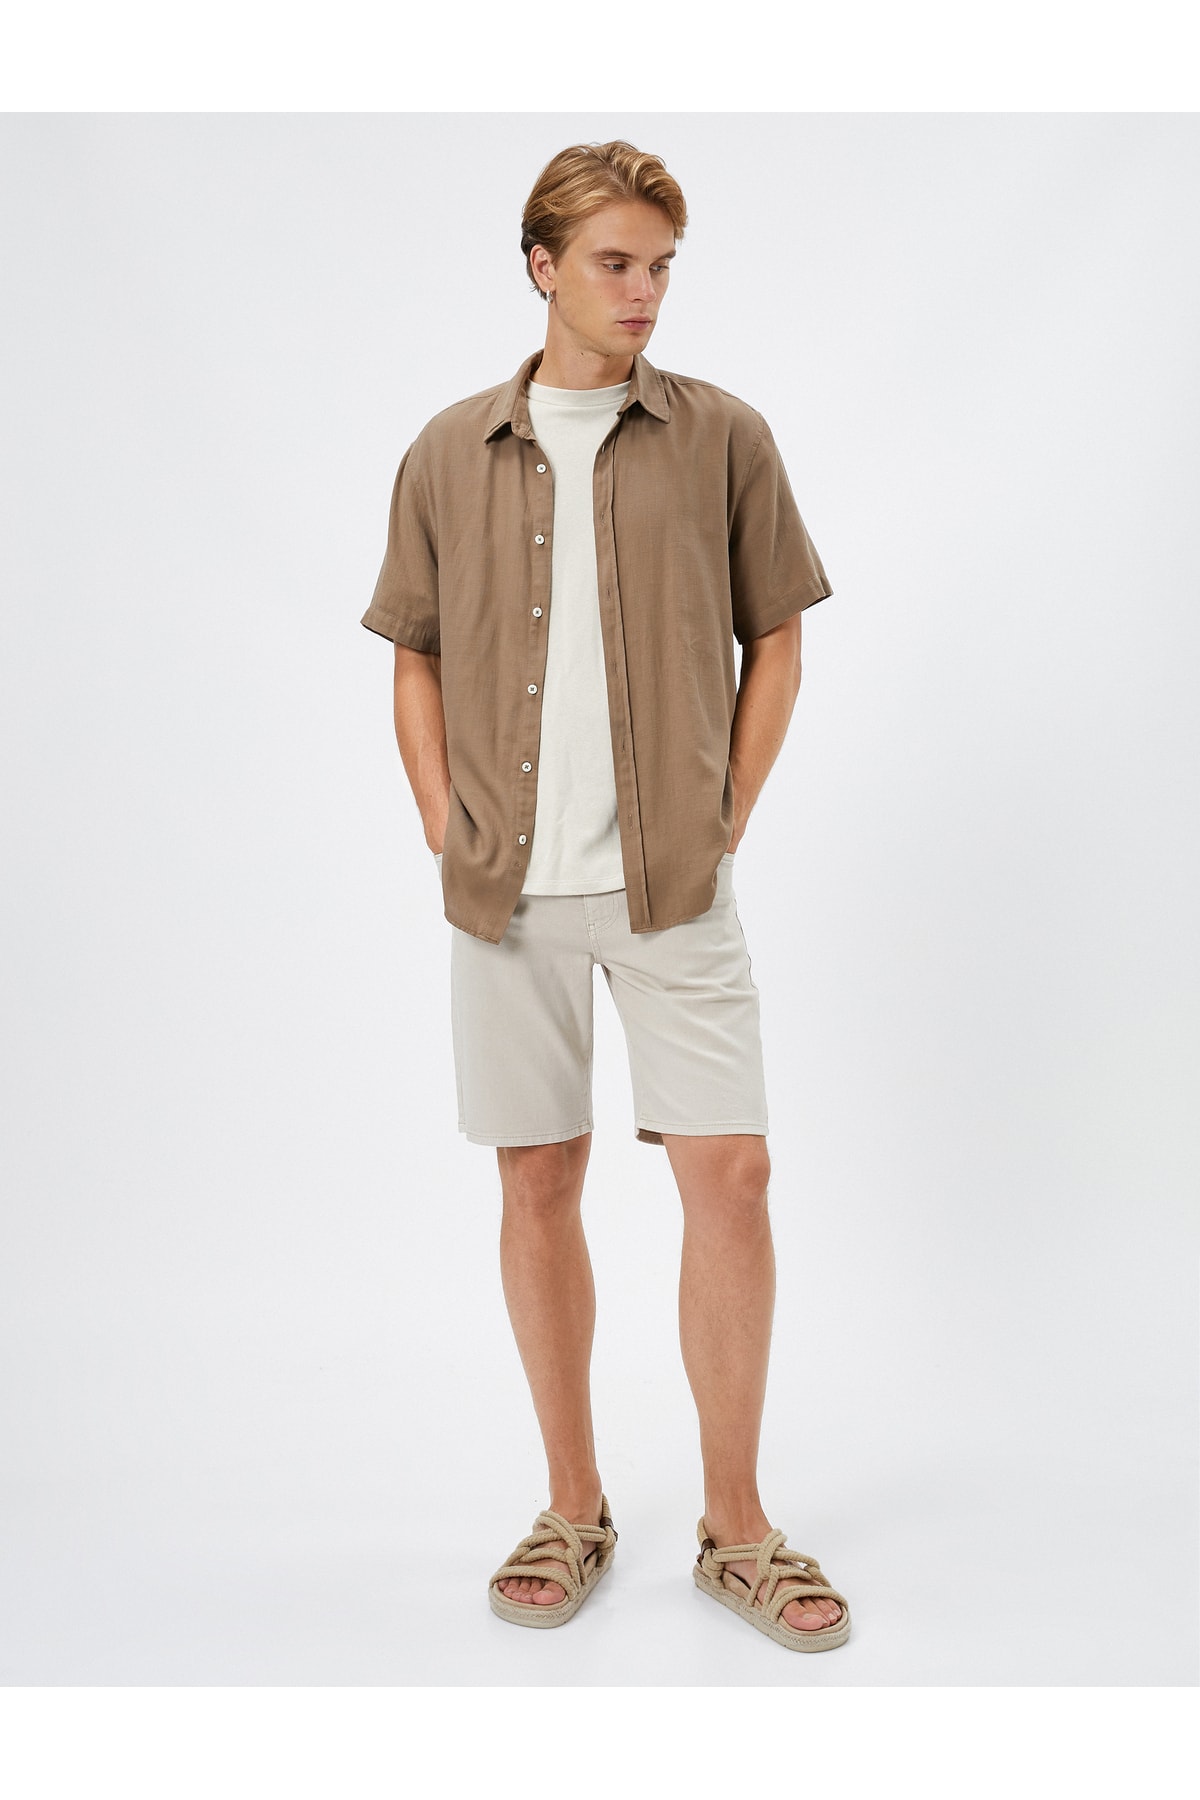 Koton Summer Shirt Short Sleeve Turndown Collar Buttoned Cotton